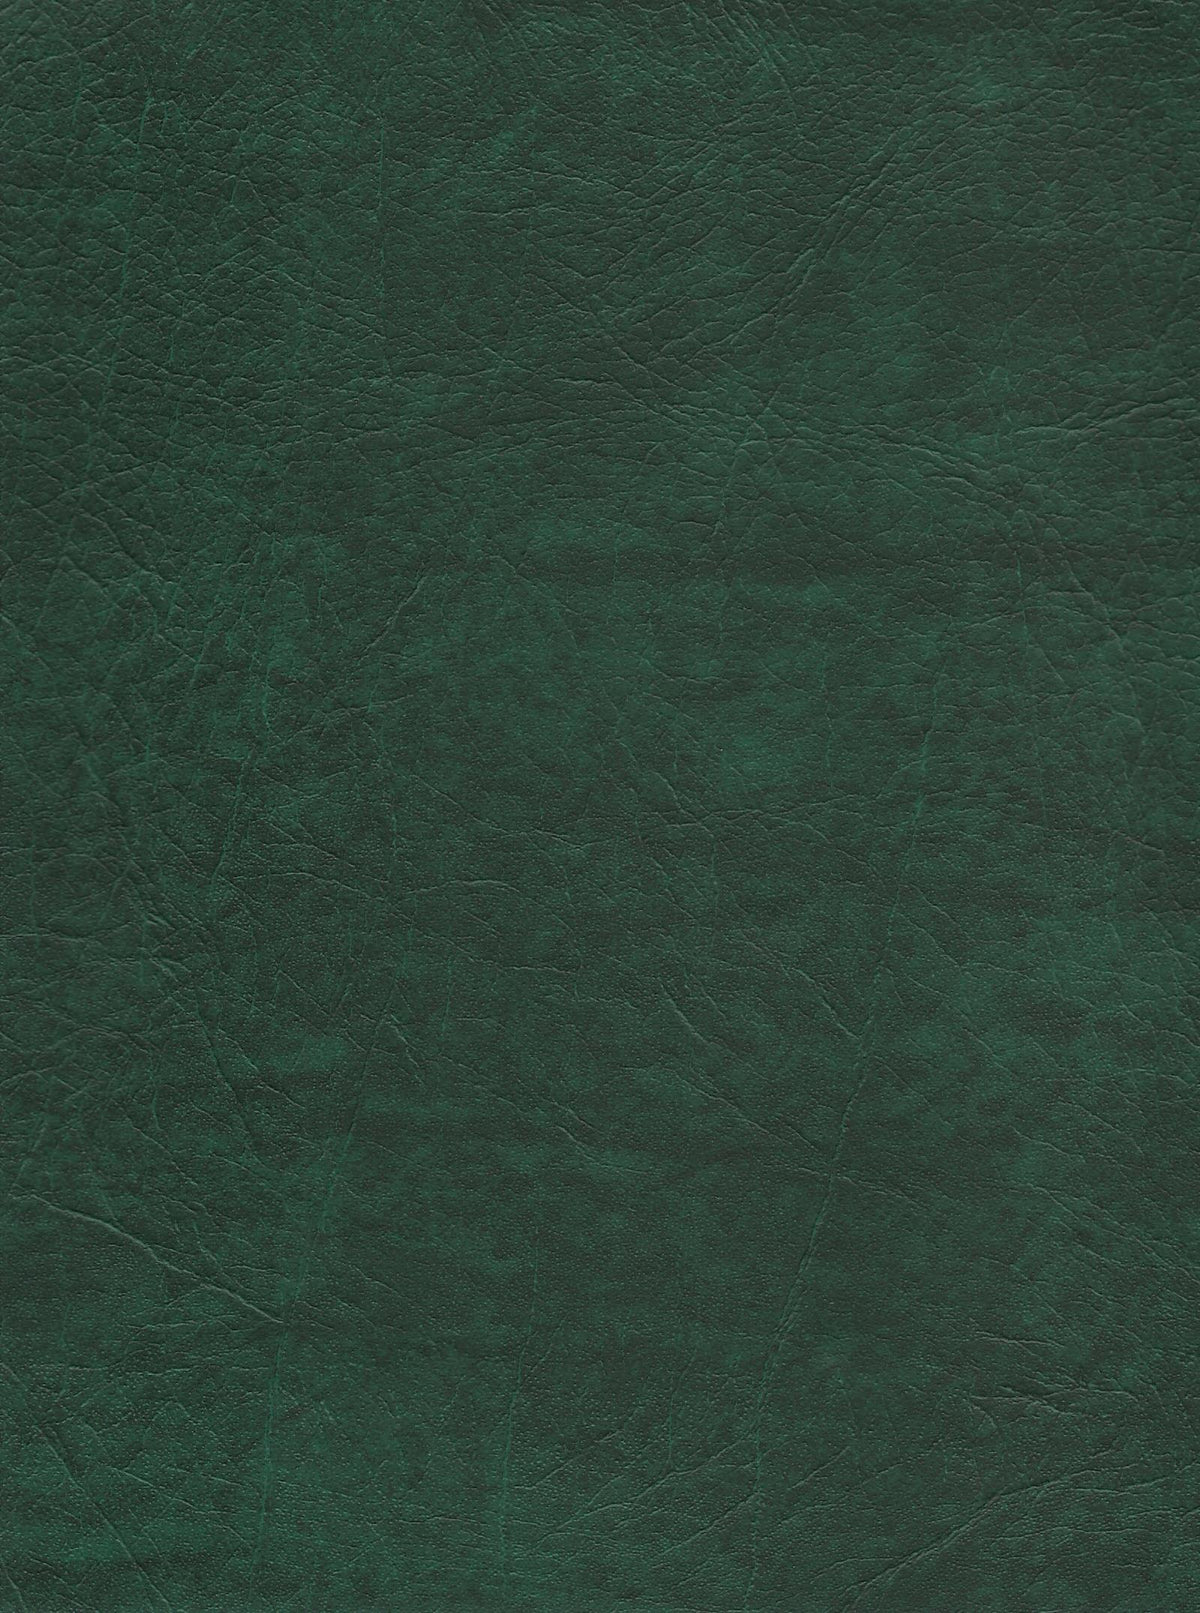 4030 -Courvin Verde Turim cor 969